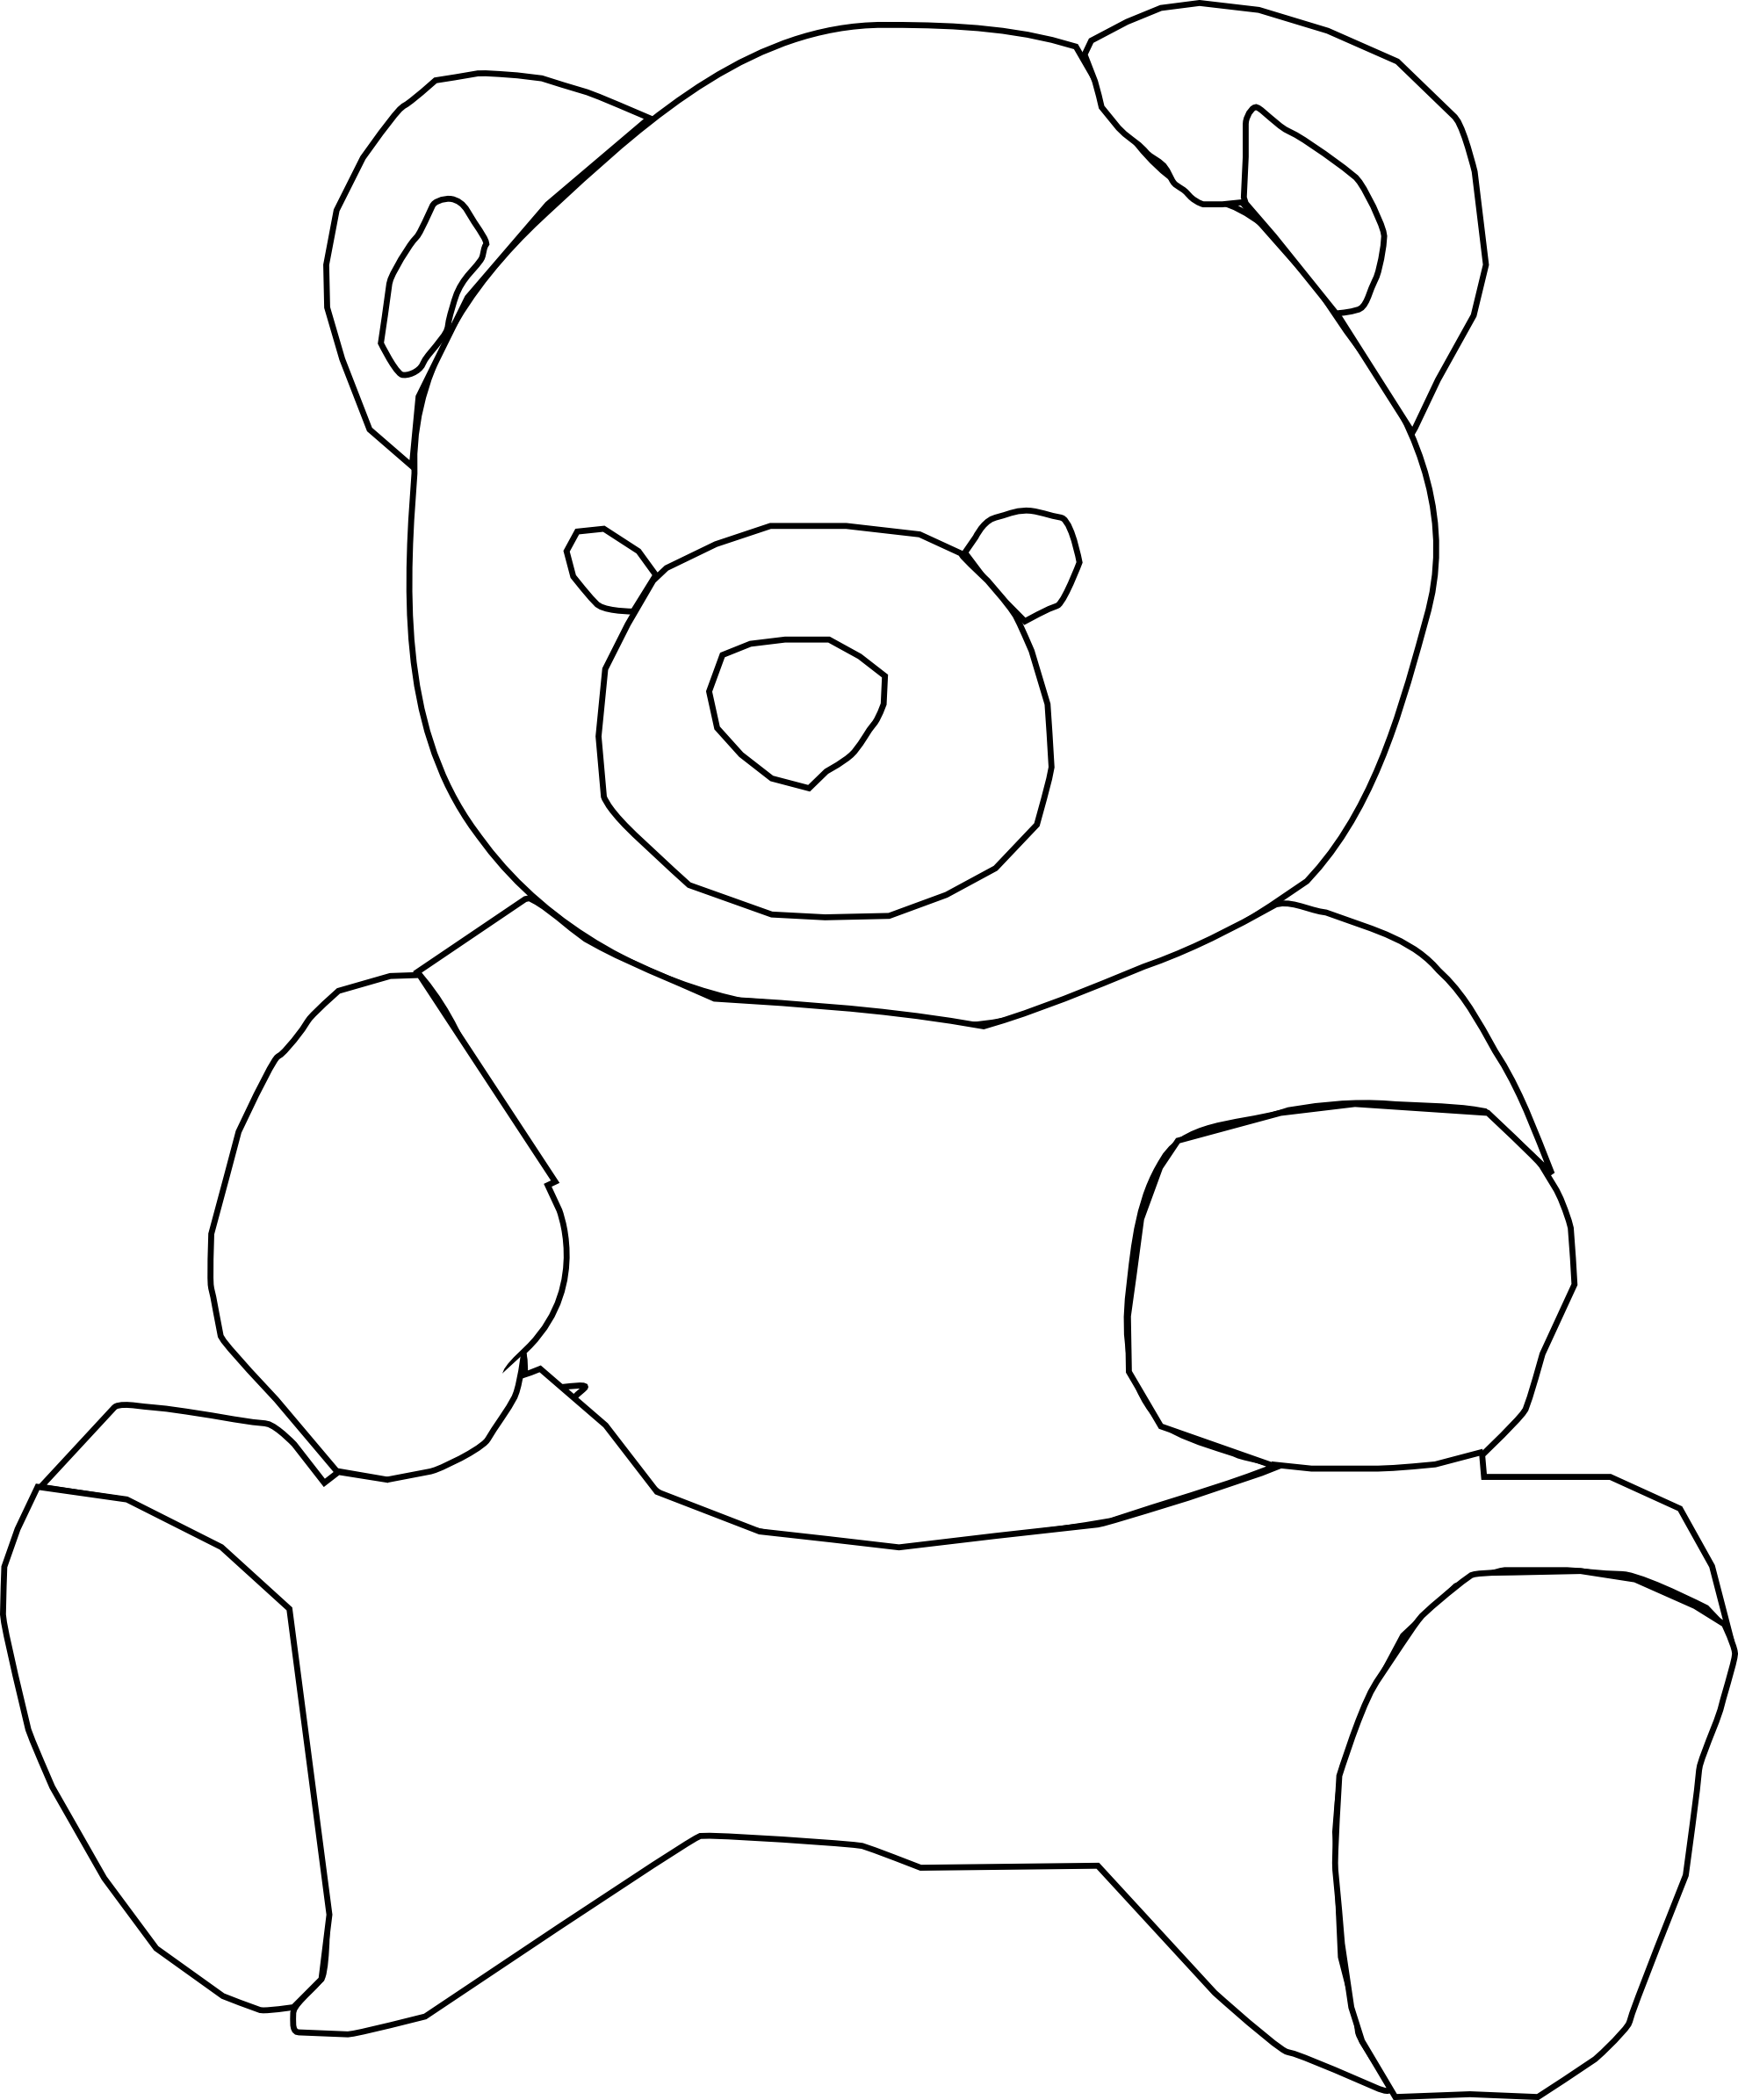 İllustration of Teddy Bear Line Art free image download